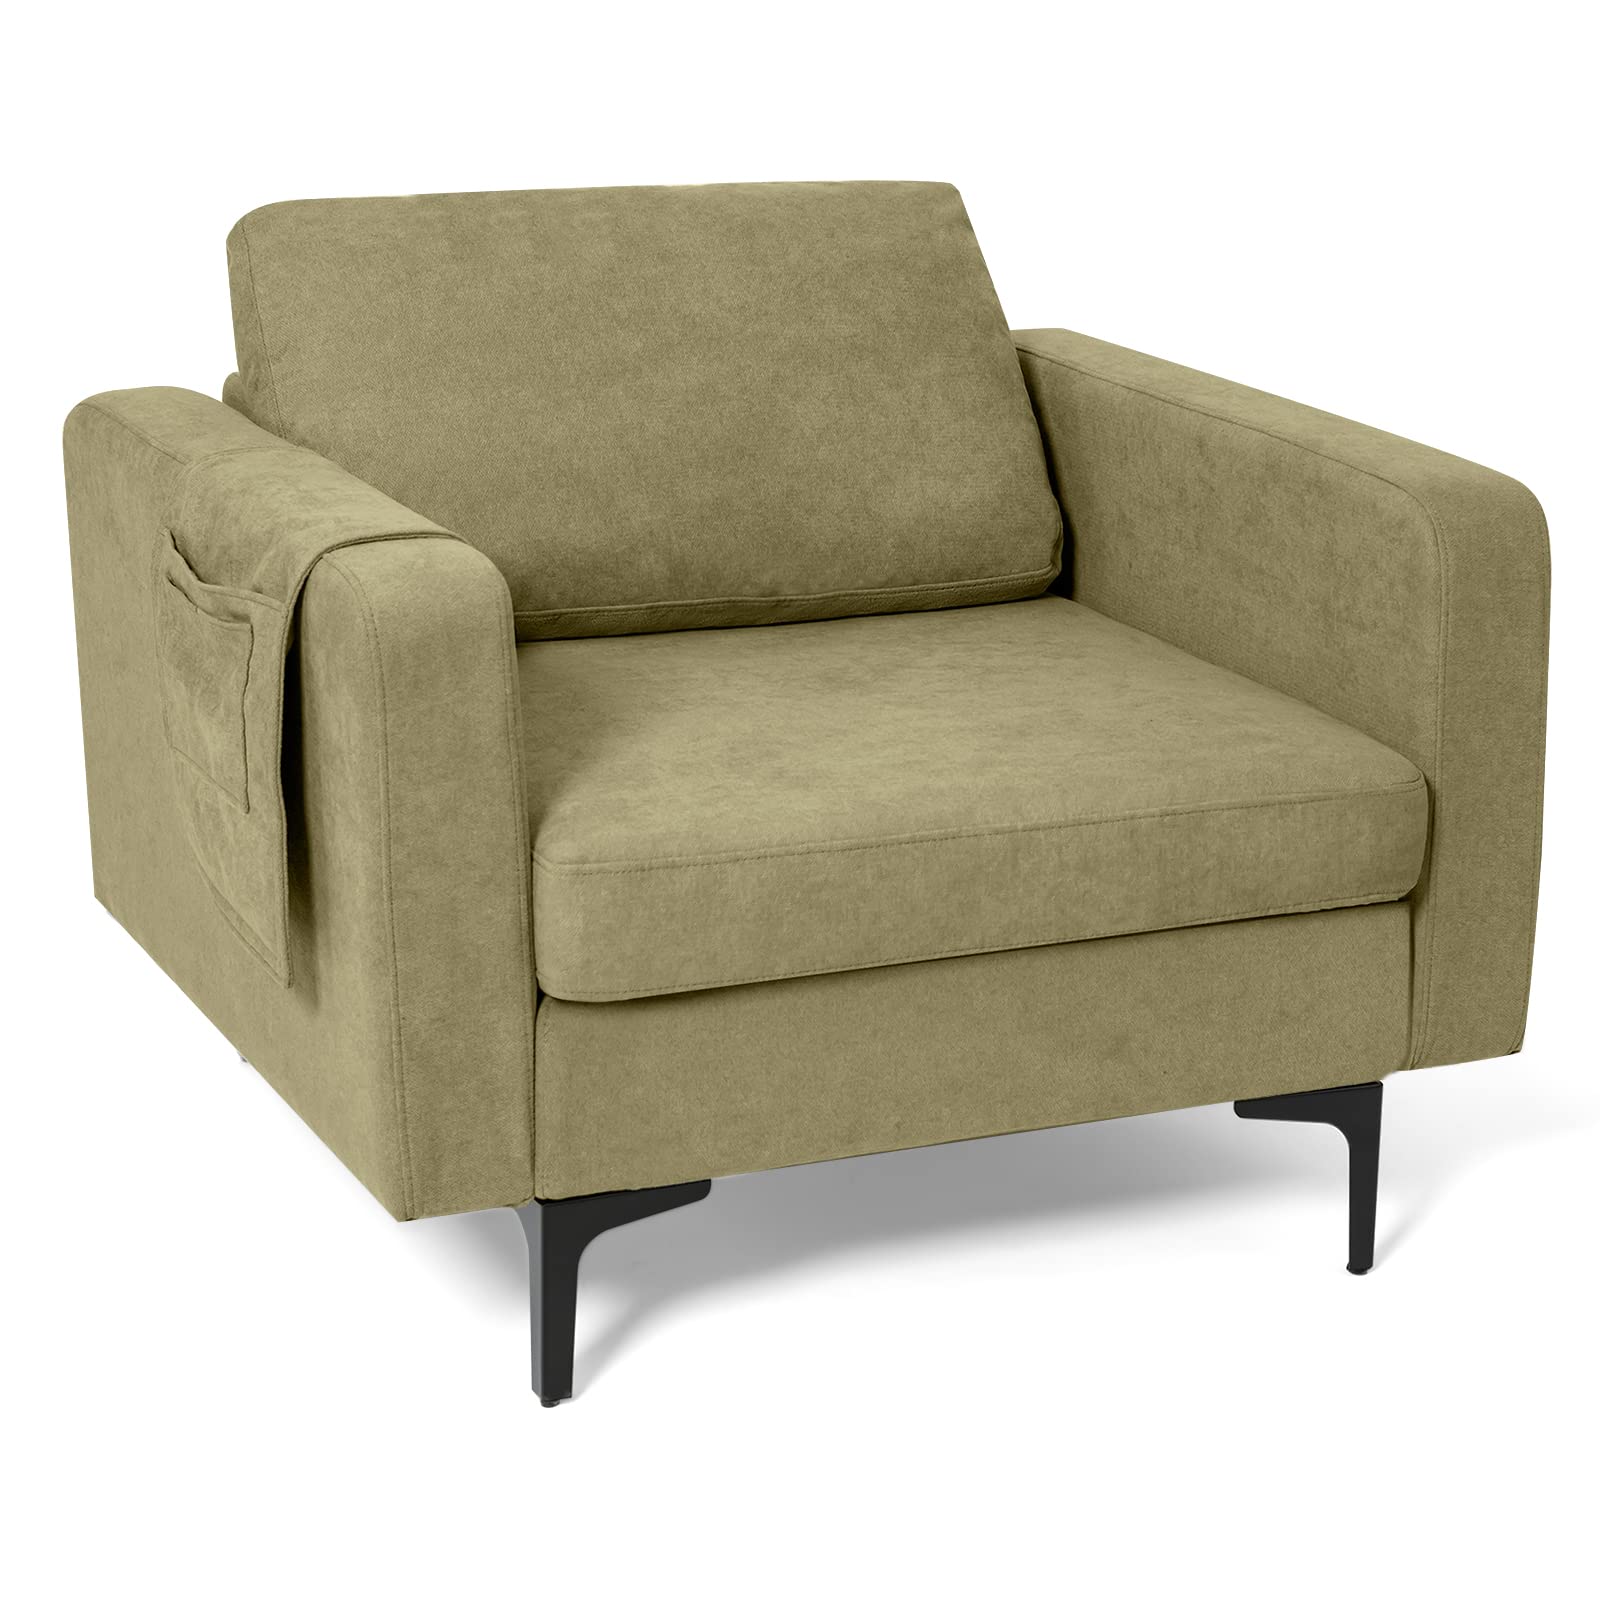 Giantex Modern Accent Chair w/Comfy Thick Cushion, Magazine Pockets